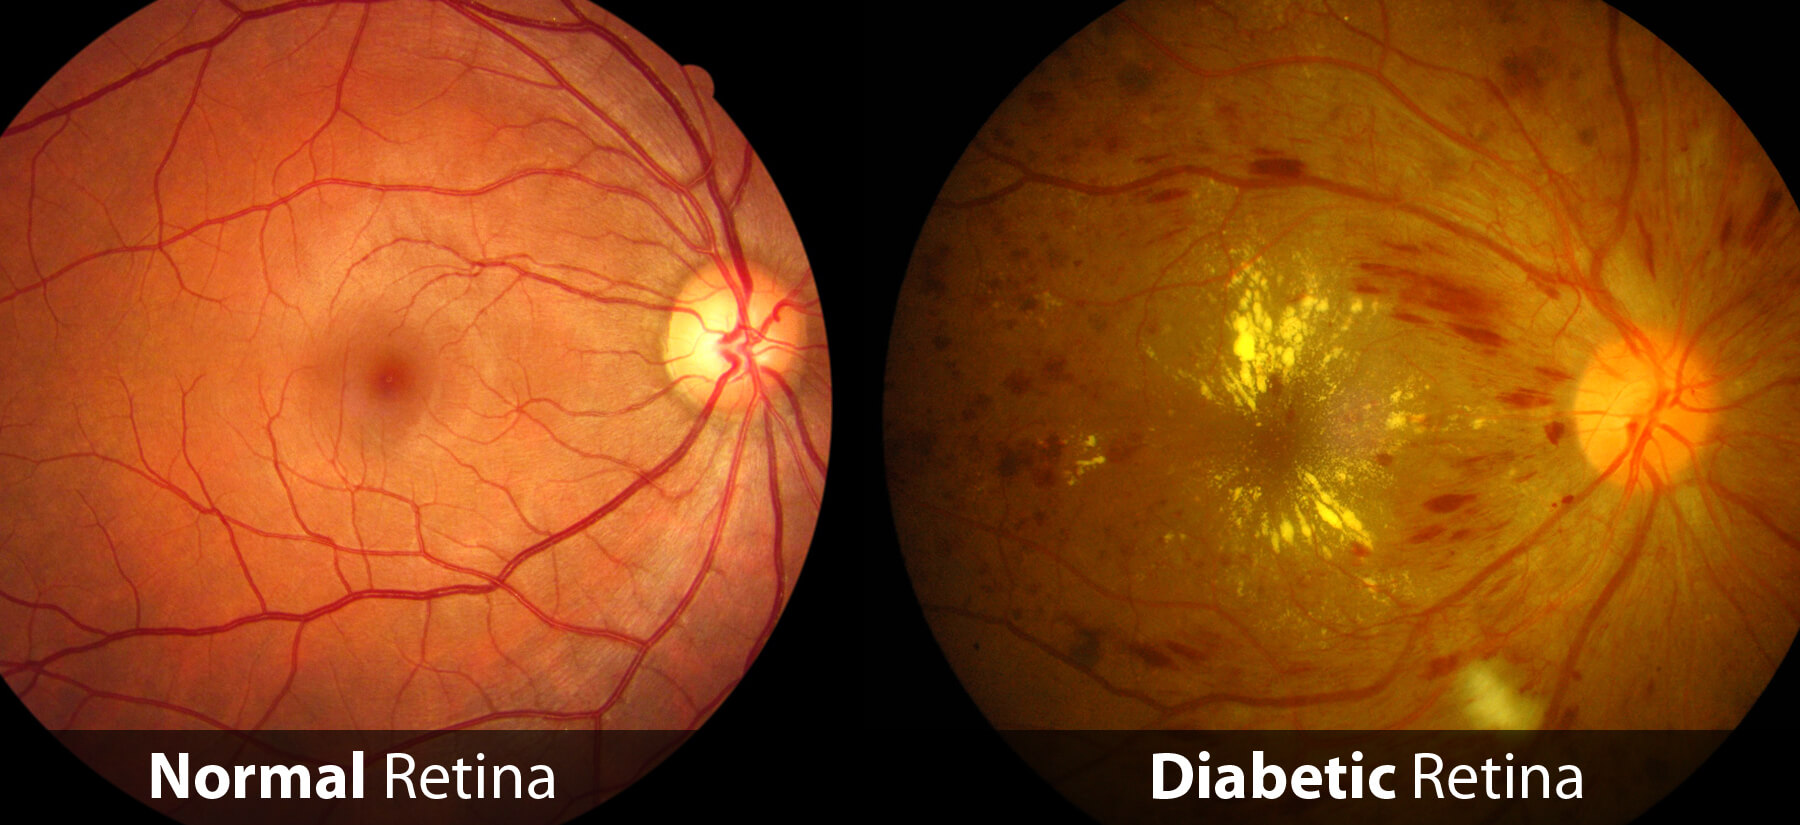 Diabetic retinopathy ophthalmology